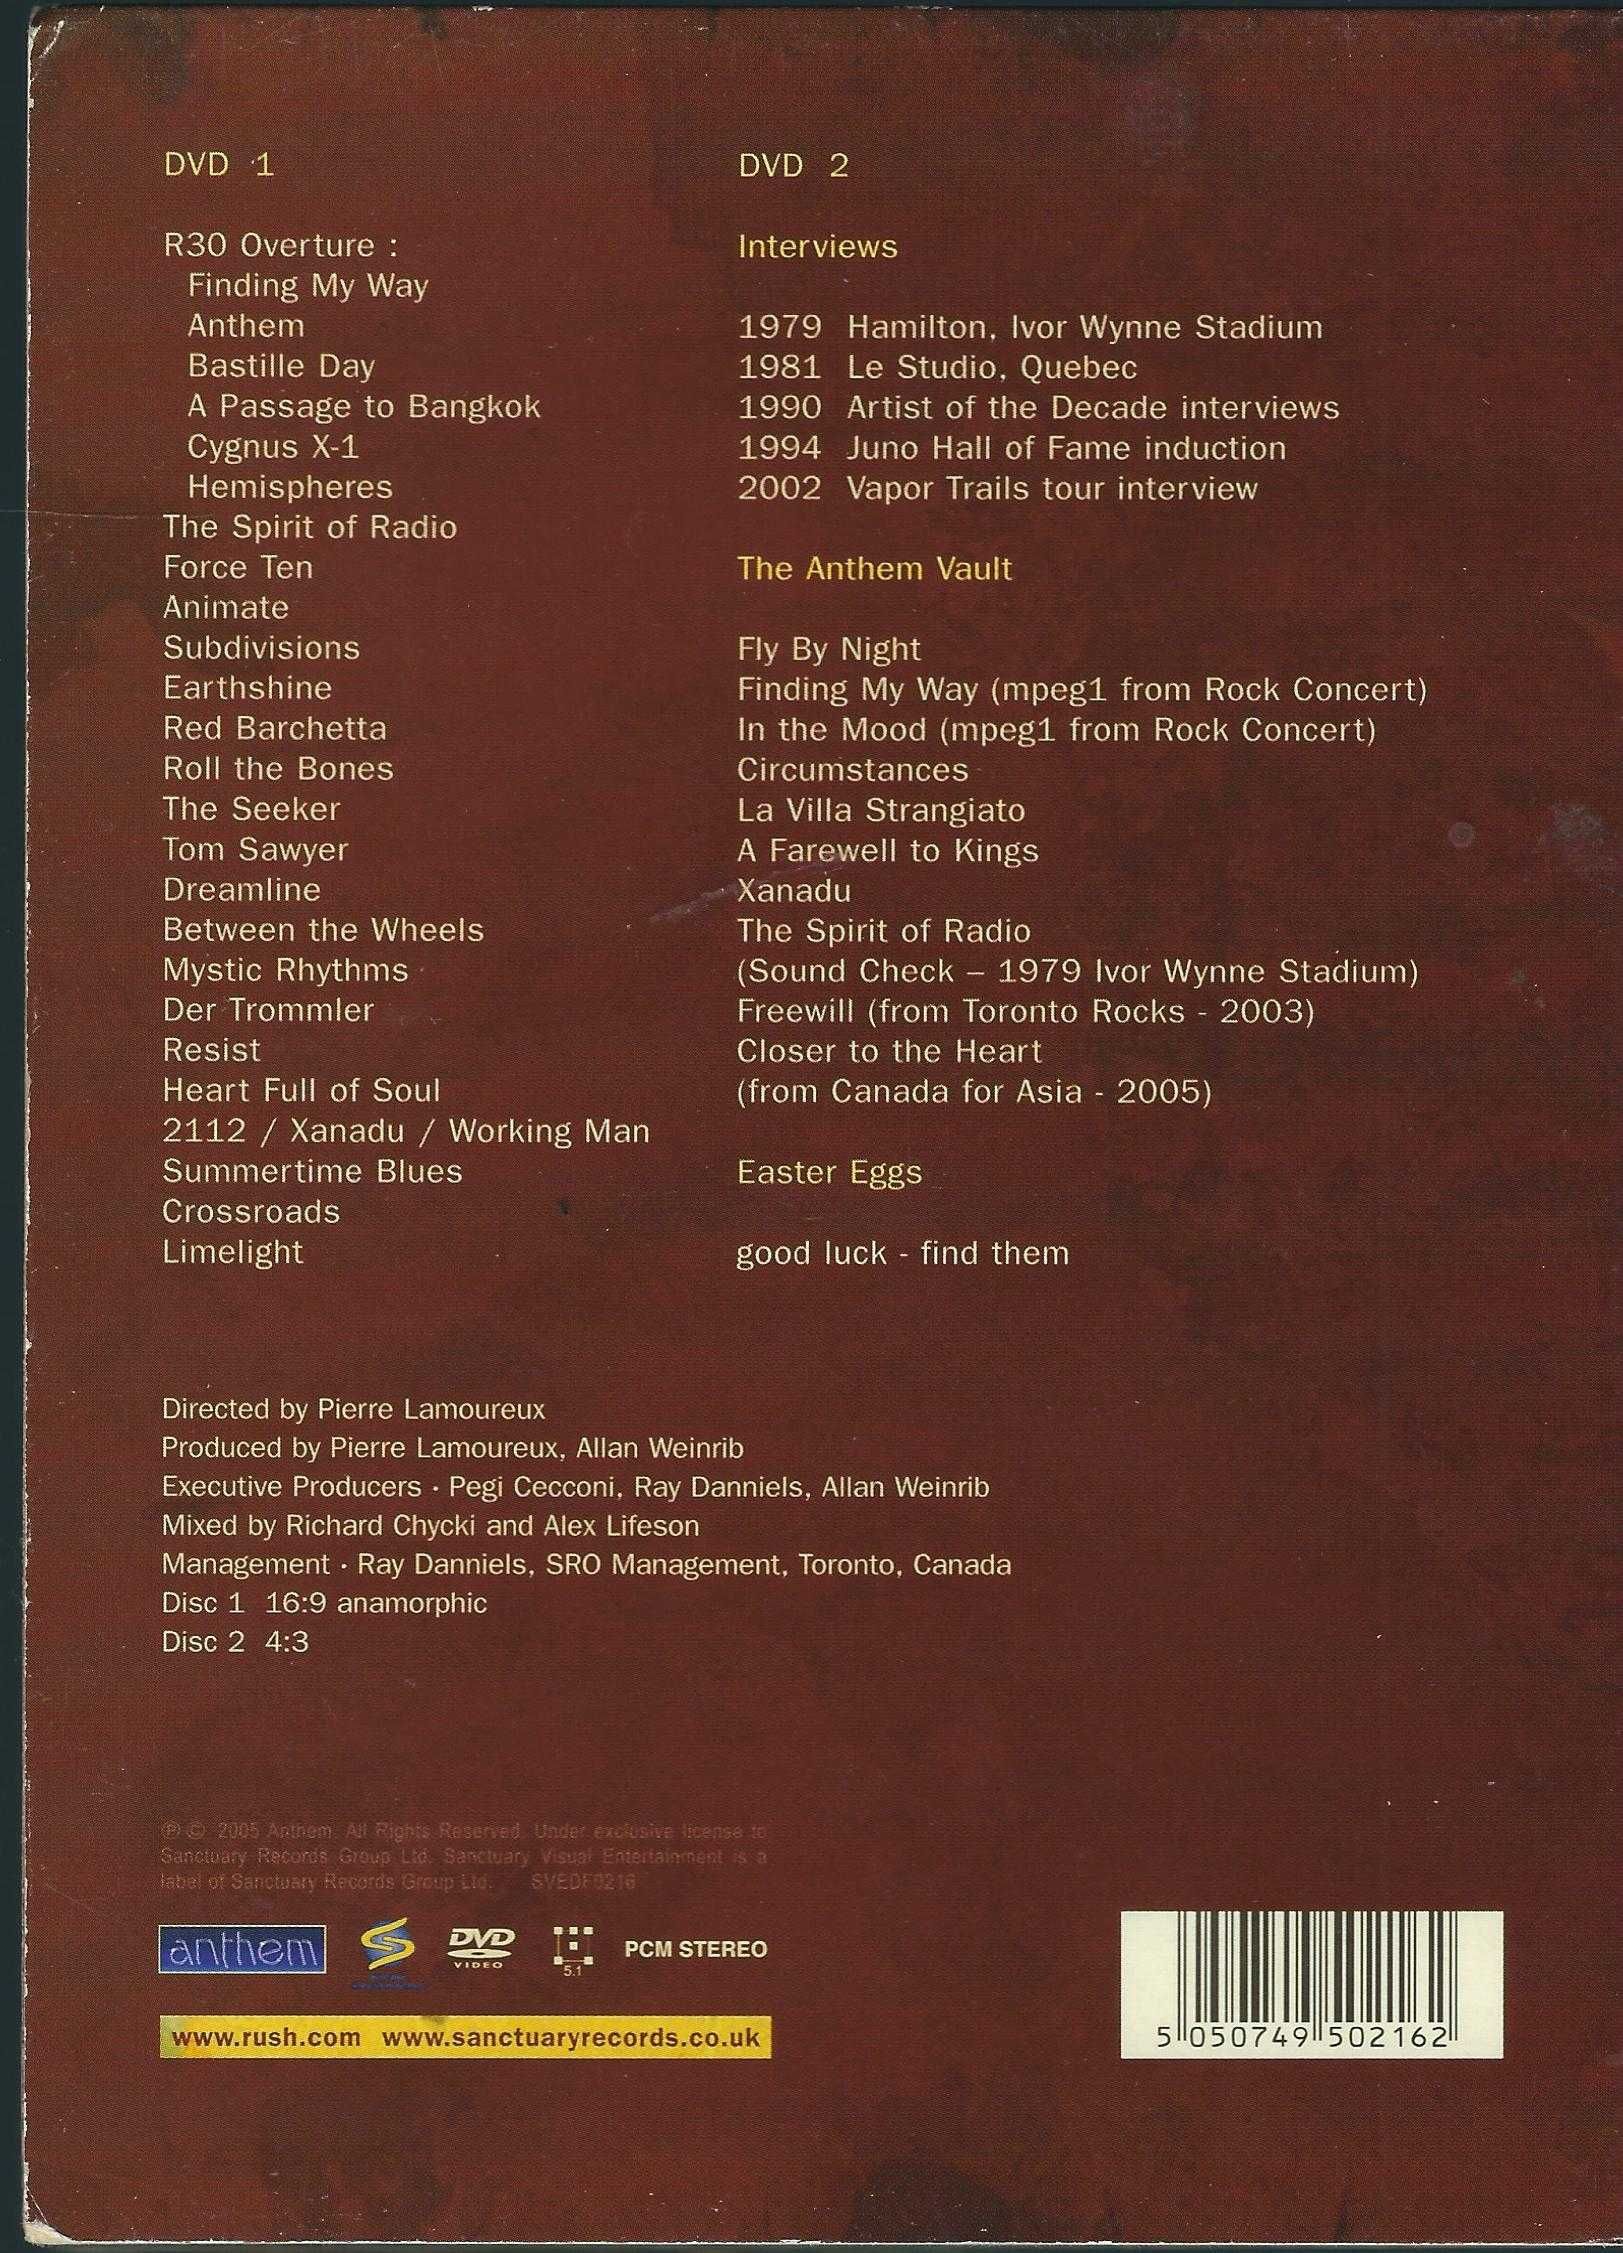 2 DVD Rush - R30 (30th Anniversary World Tour) (2005)